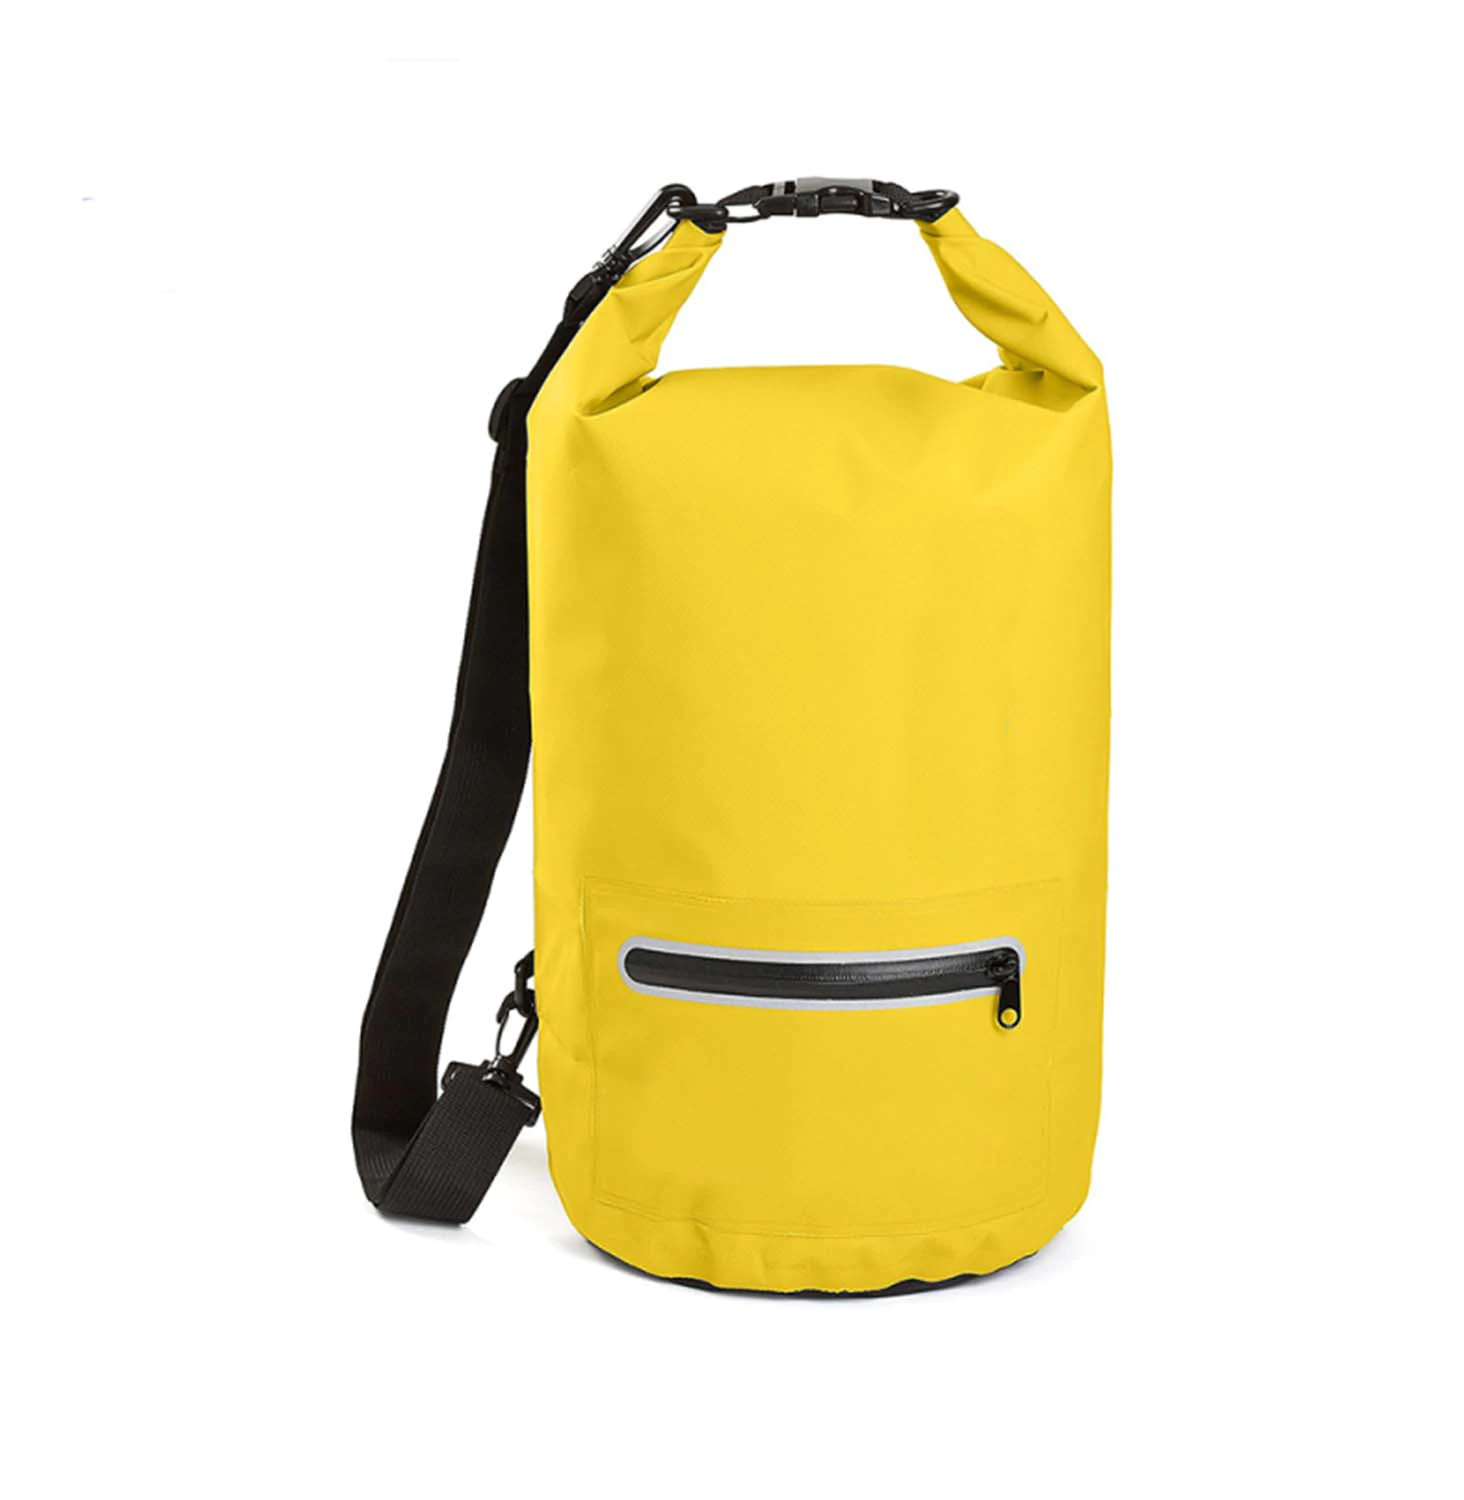 sailing dry bag with adjustable shoulder strap for rafting Prosperity